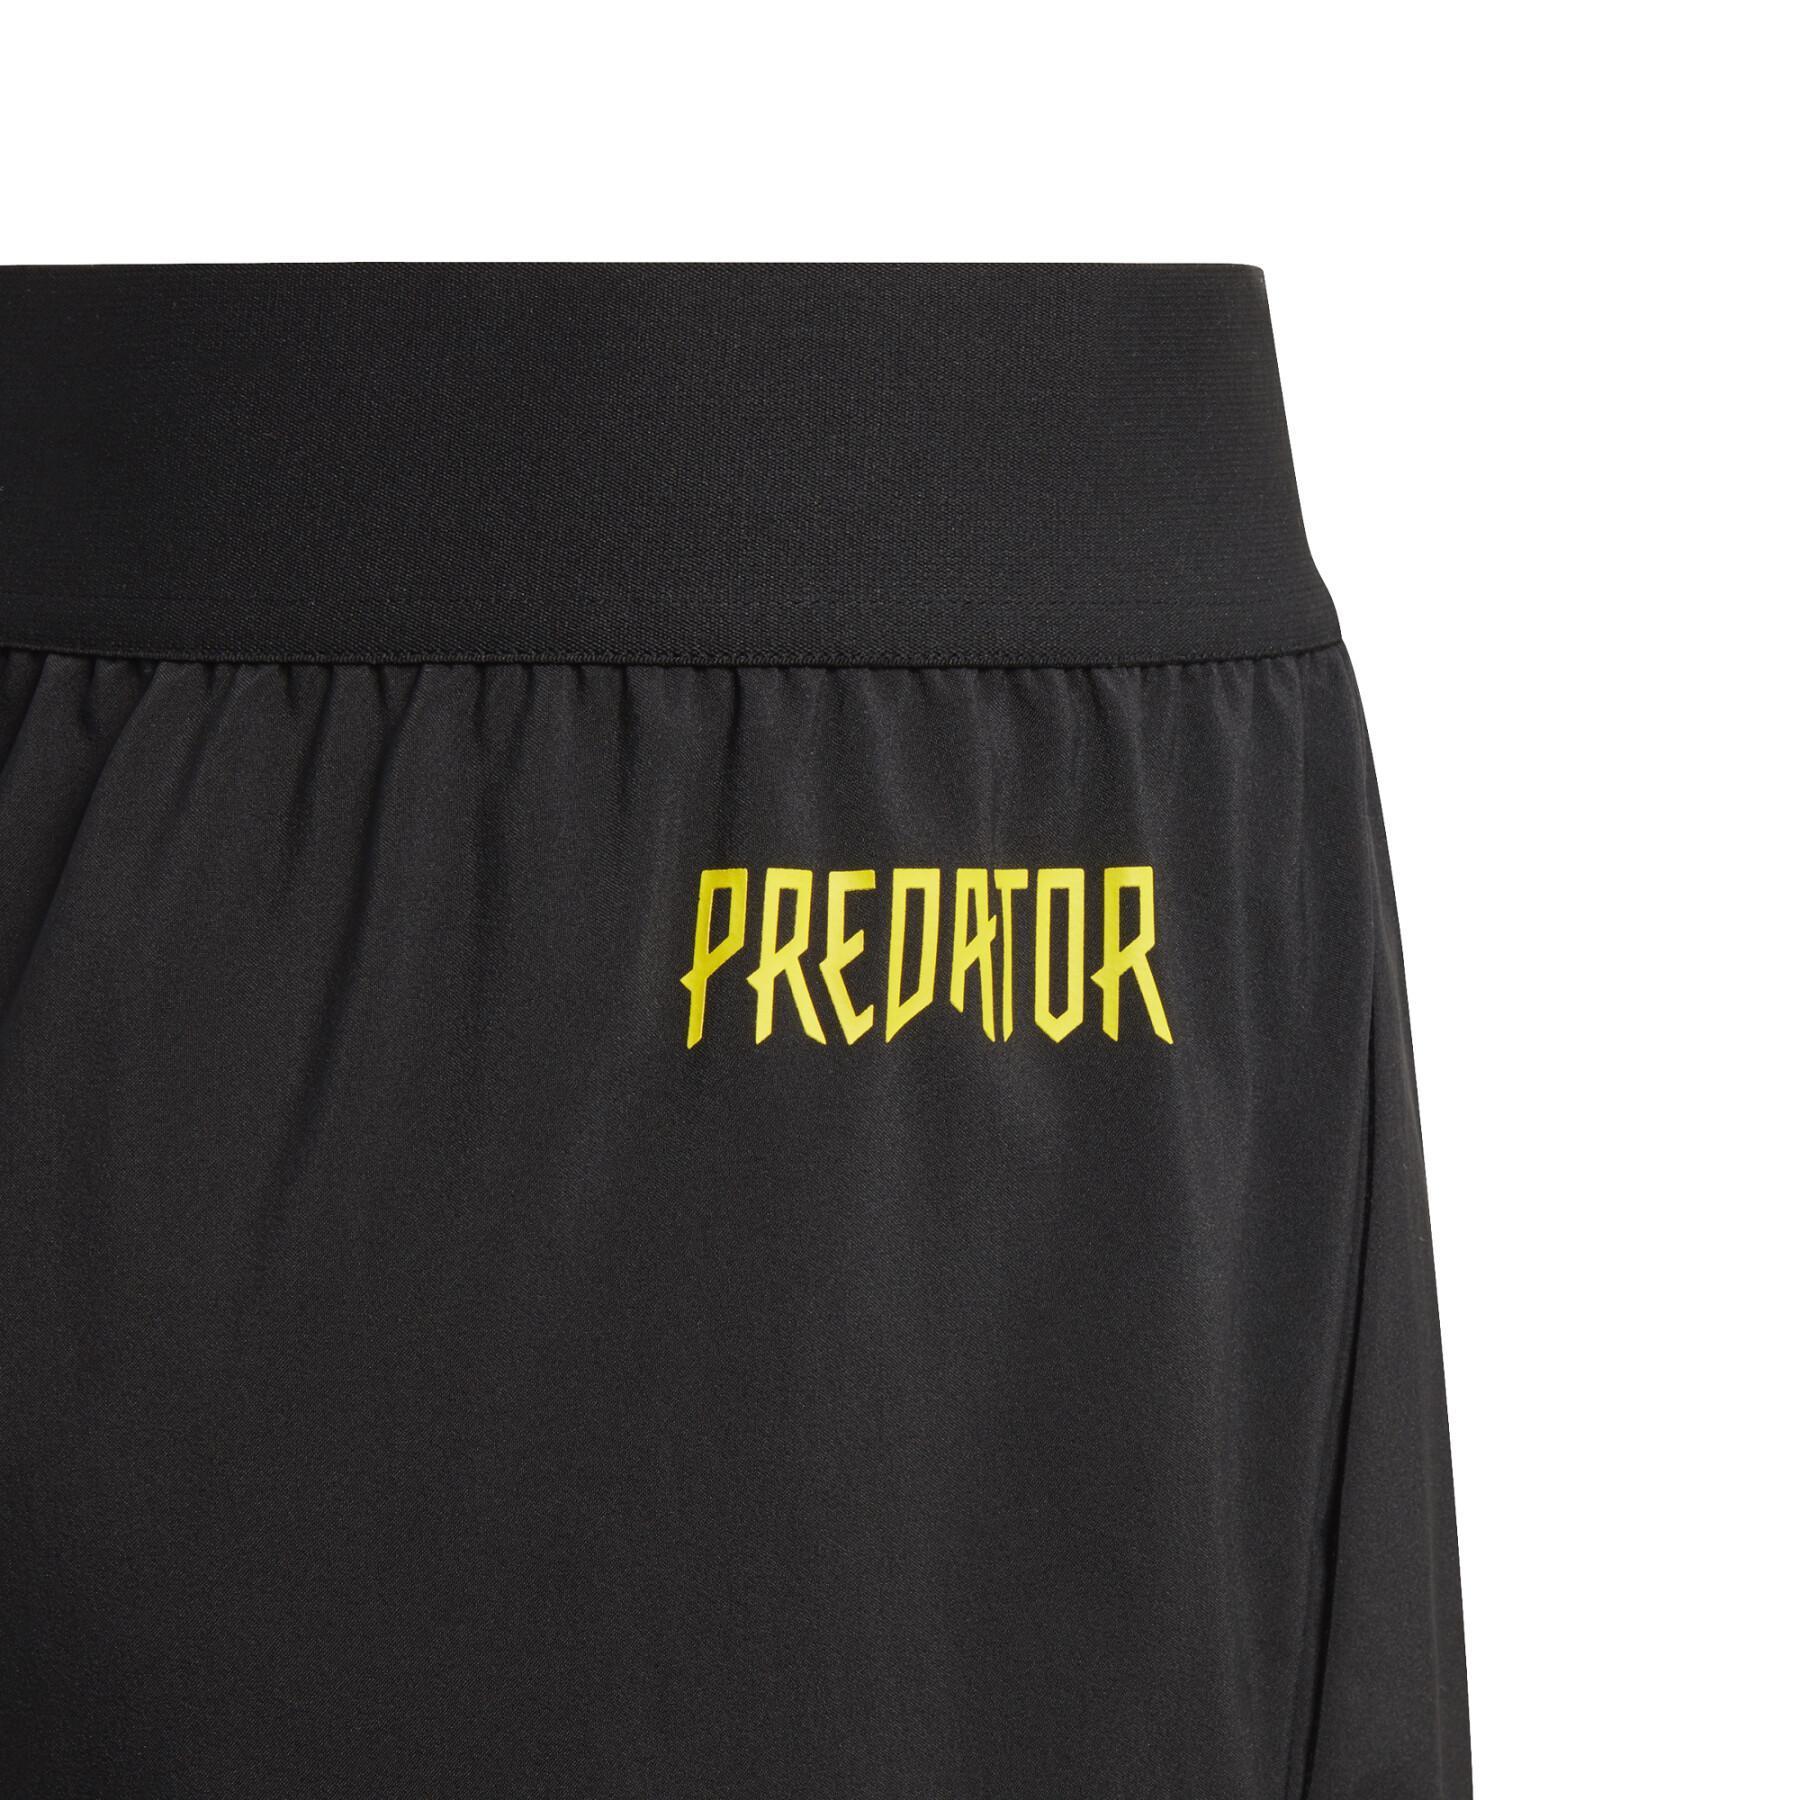 Kinder shorts adidas Football-Inspired Predator